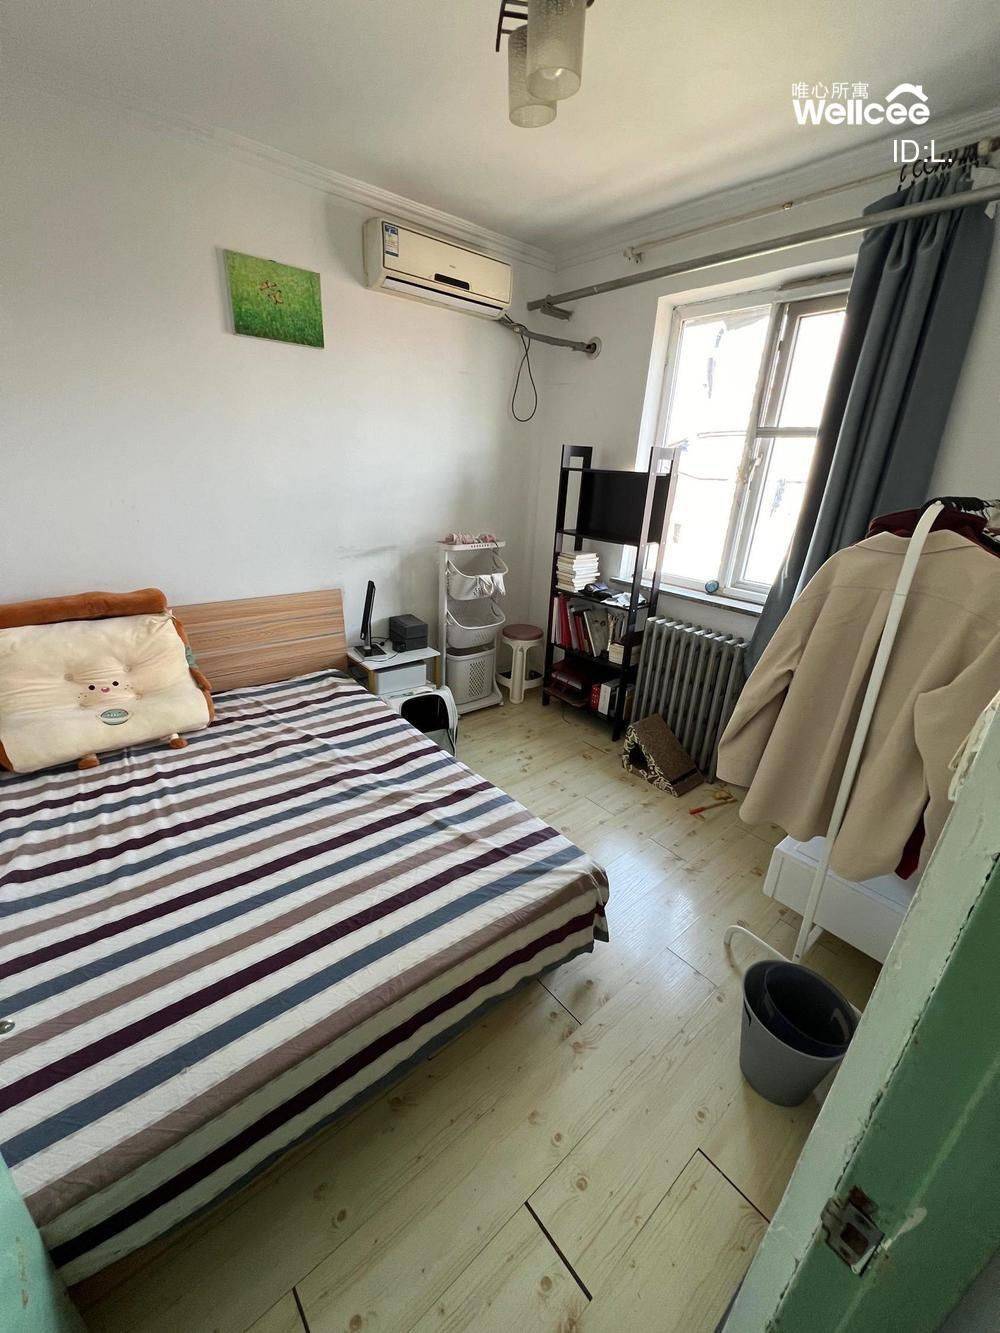 Beijing-Chaoyang-Sublet,Shared Apartment,Seeking Flatmate,LGBTQ Friendly